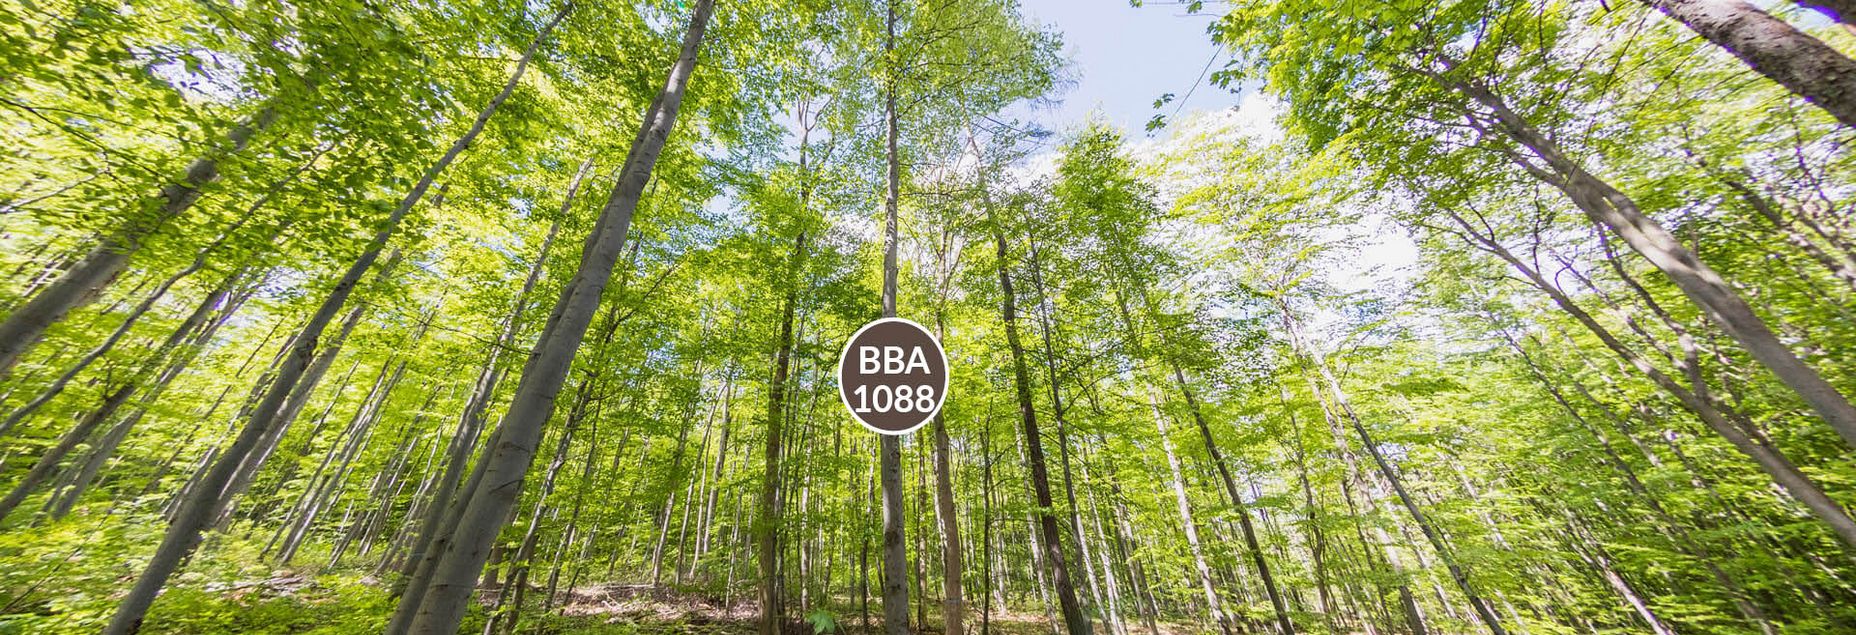 Baum BBA 1088 - Fisheyeperspektive